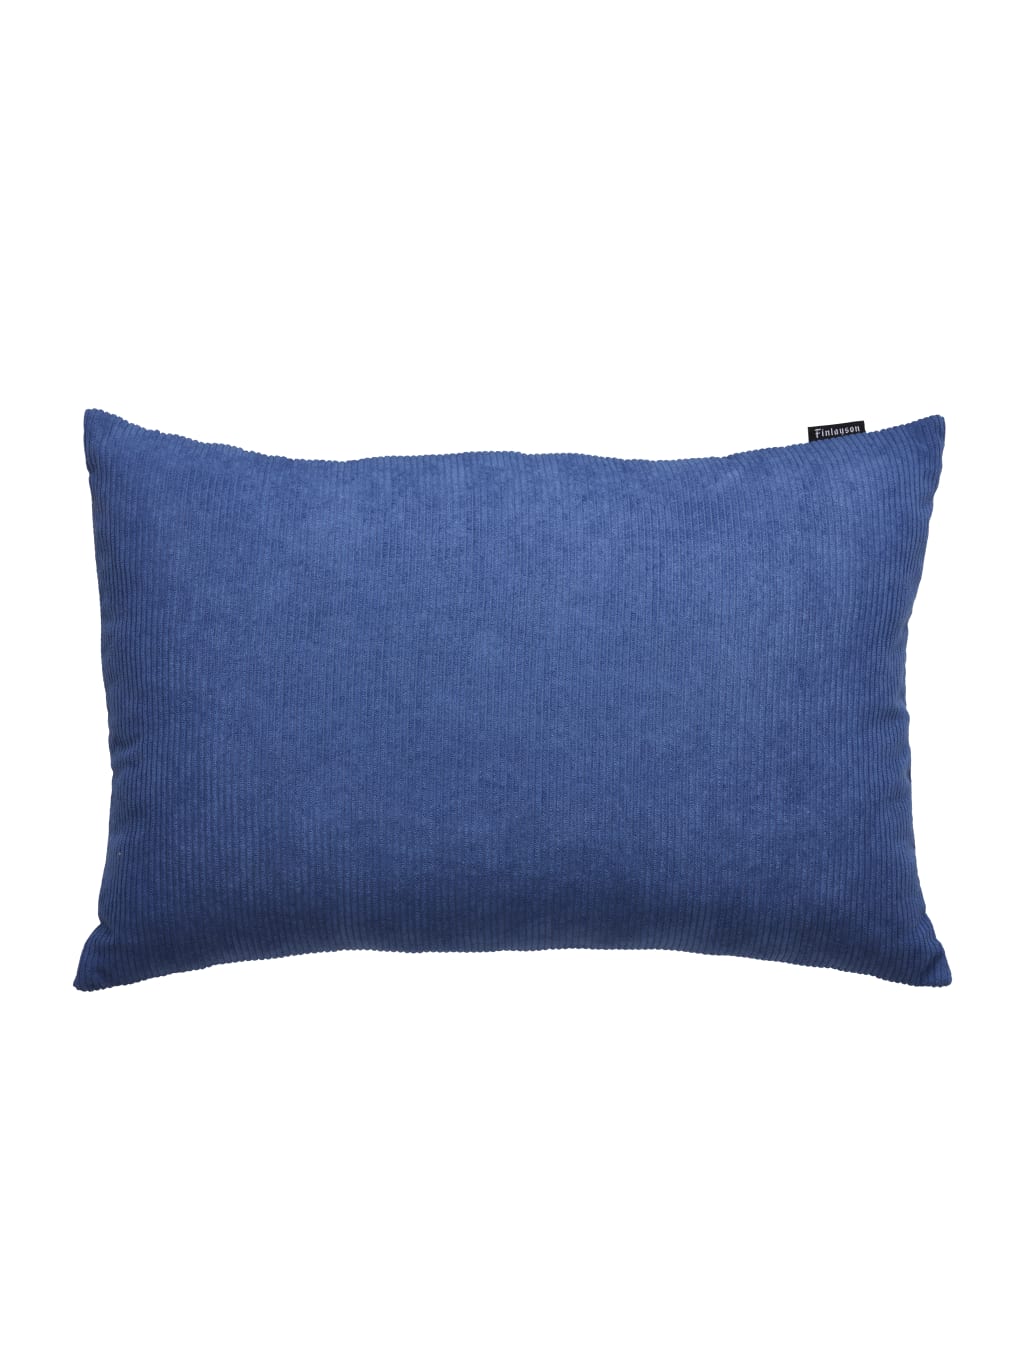 Venla decorative pillow